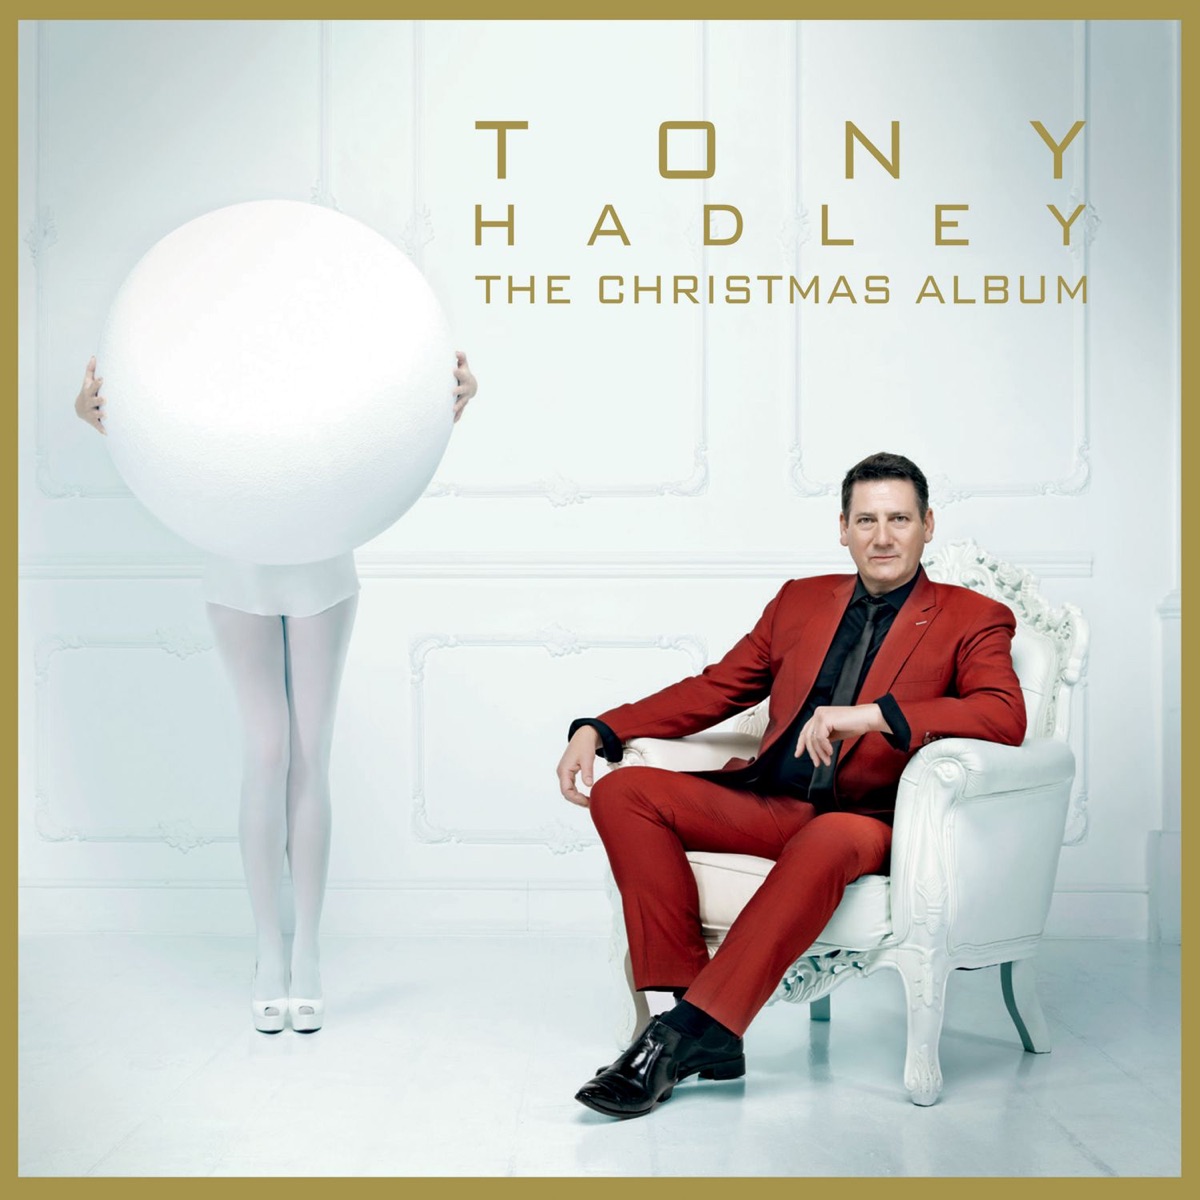 Talking to the Moon - Album by Tony Hadley - Apple Music